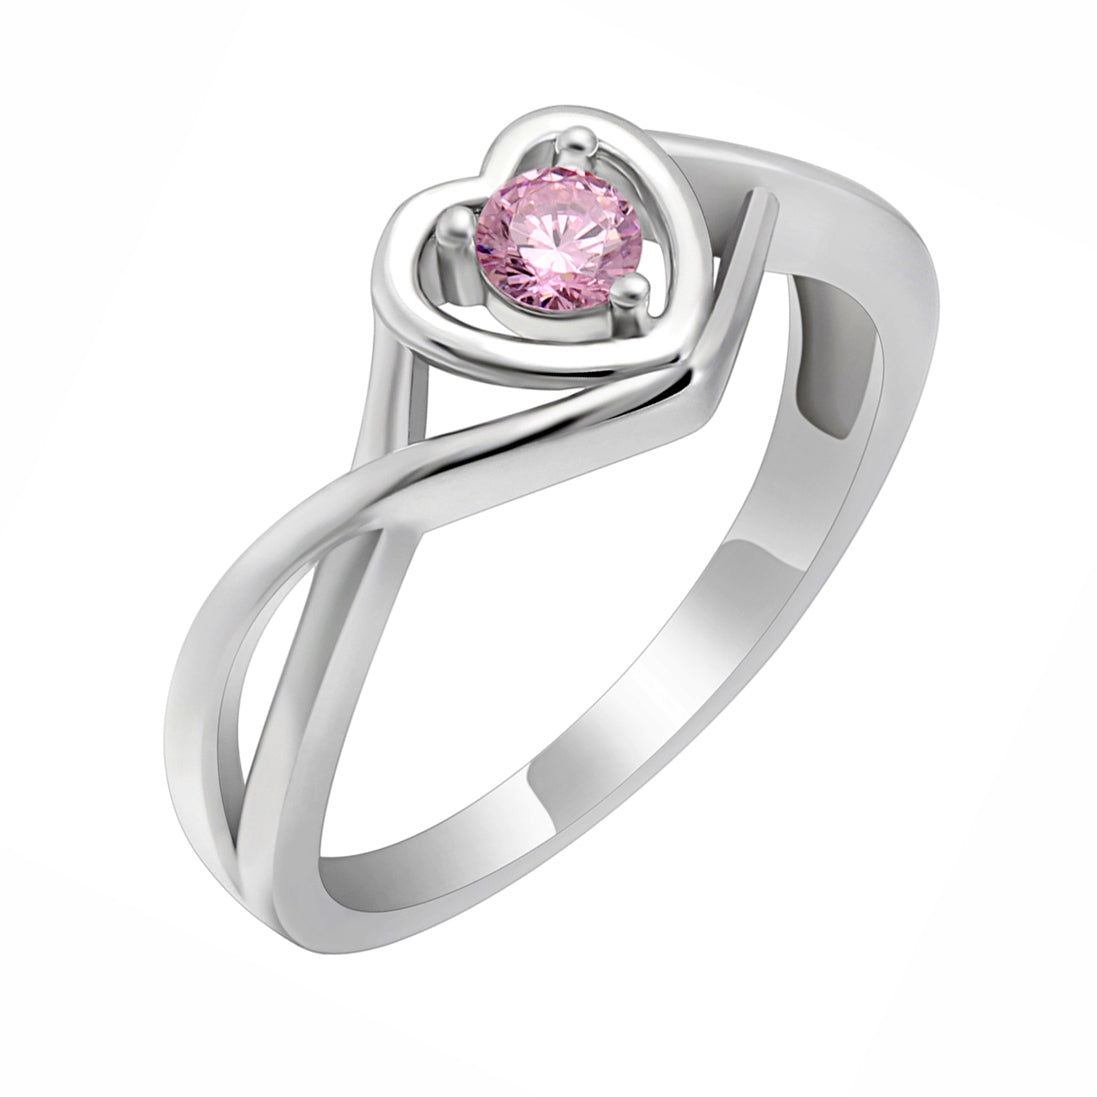 Christine Promise Ring Heart Engagement Women Silver Cz Ginger Lyne - October Pink,6